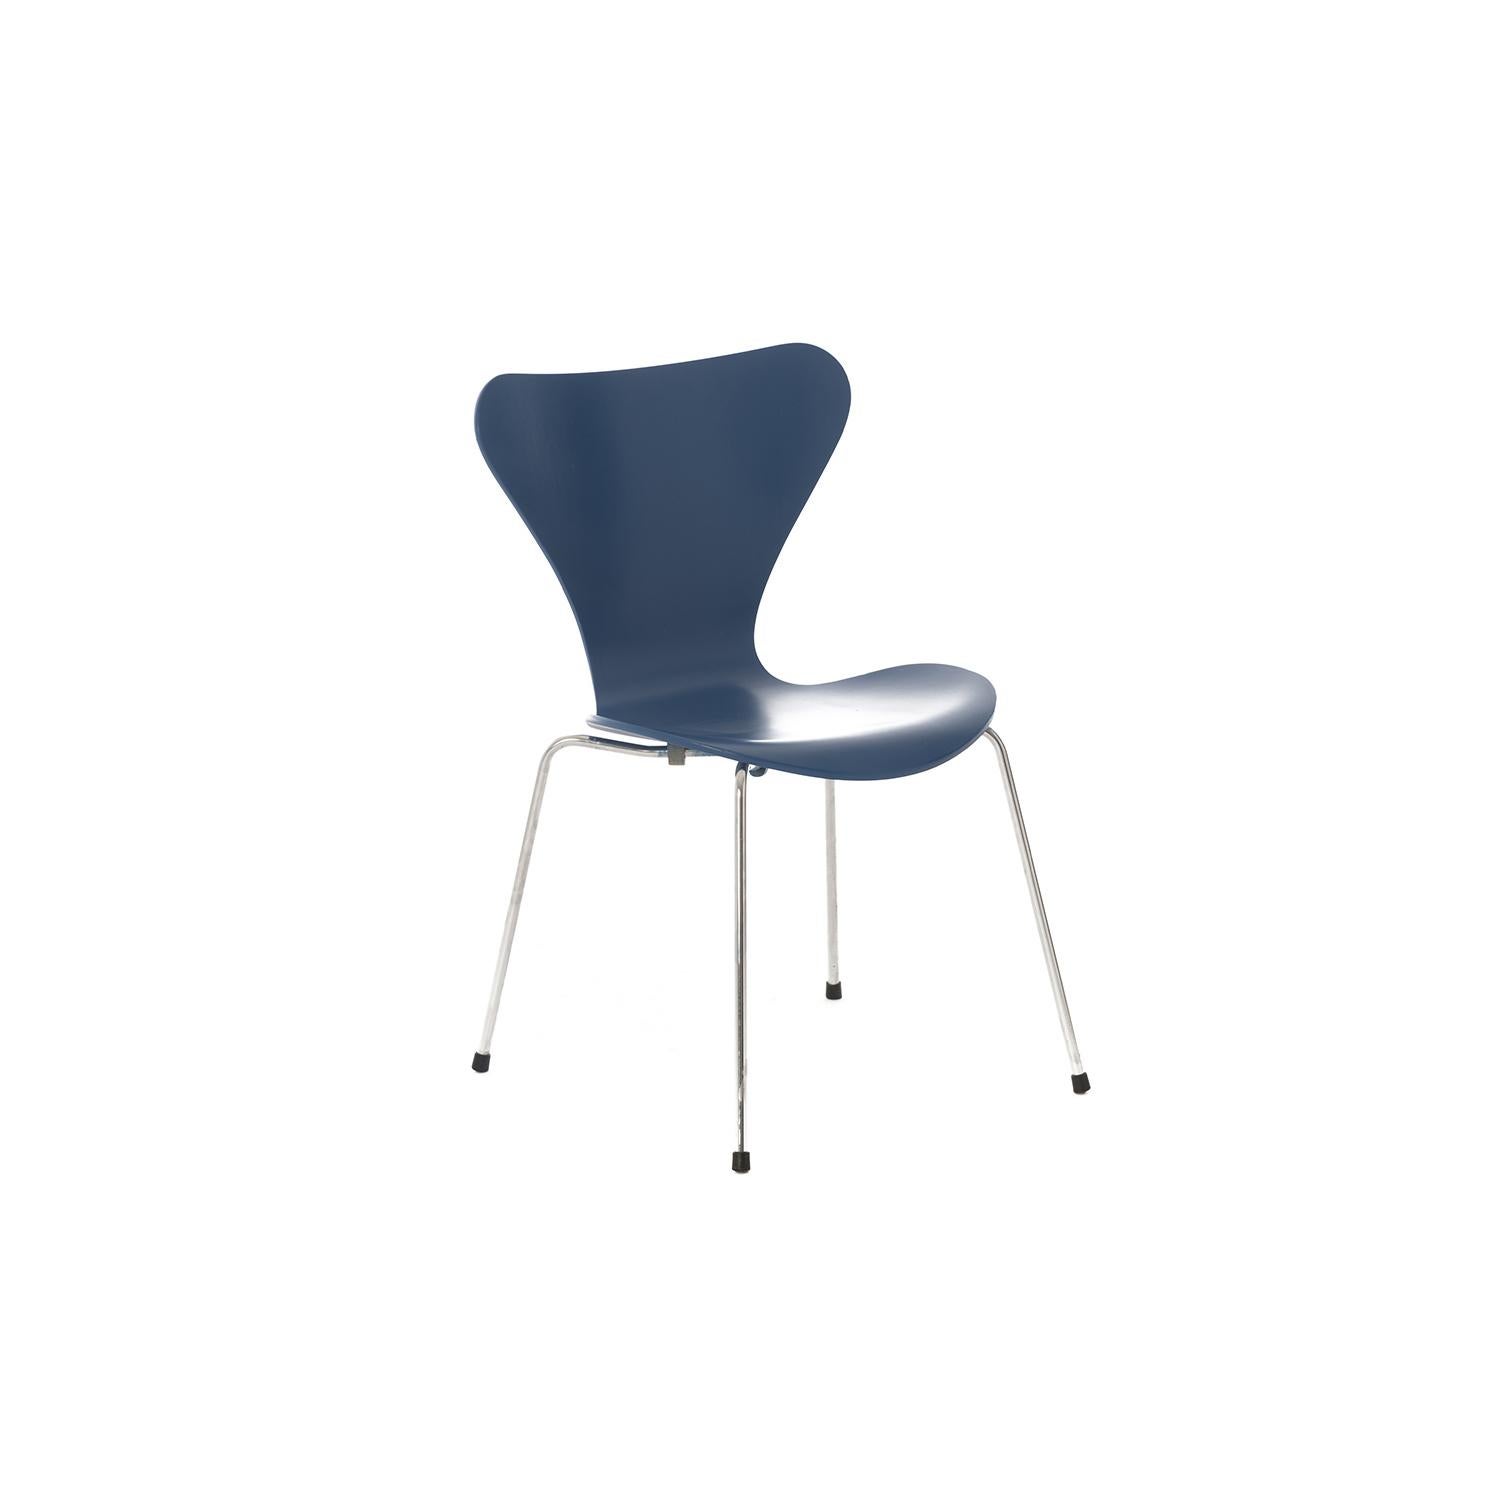 20th Century Danish Modern Original Series 7 Chairs by Arne Jacobsen, Set of 4